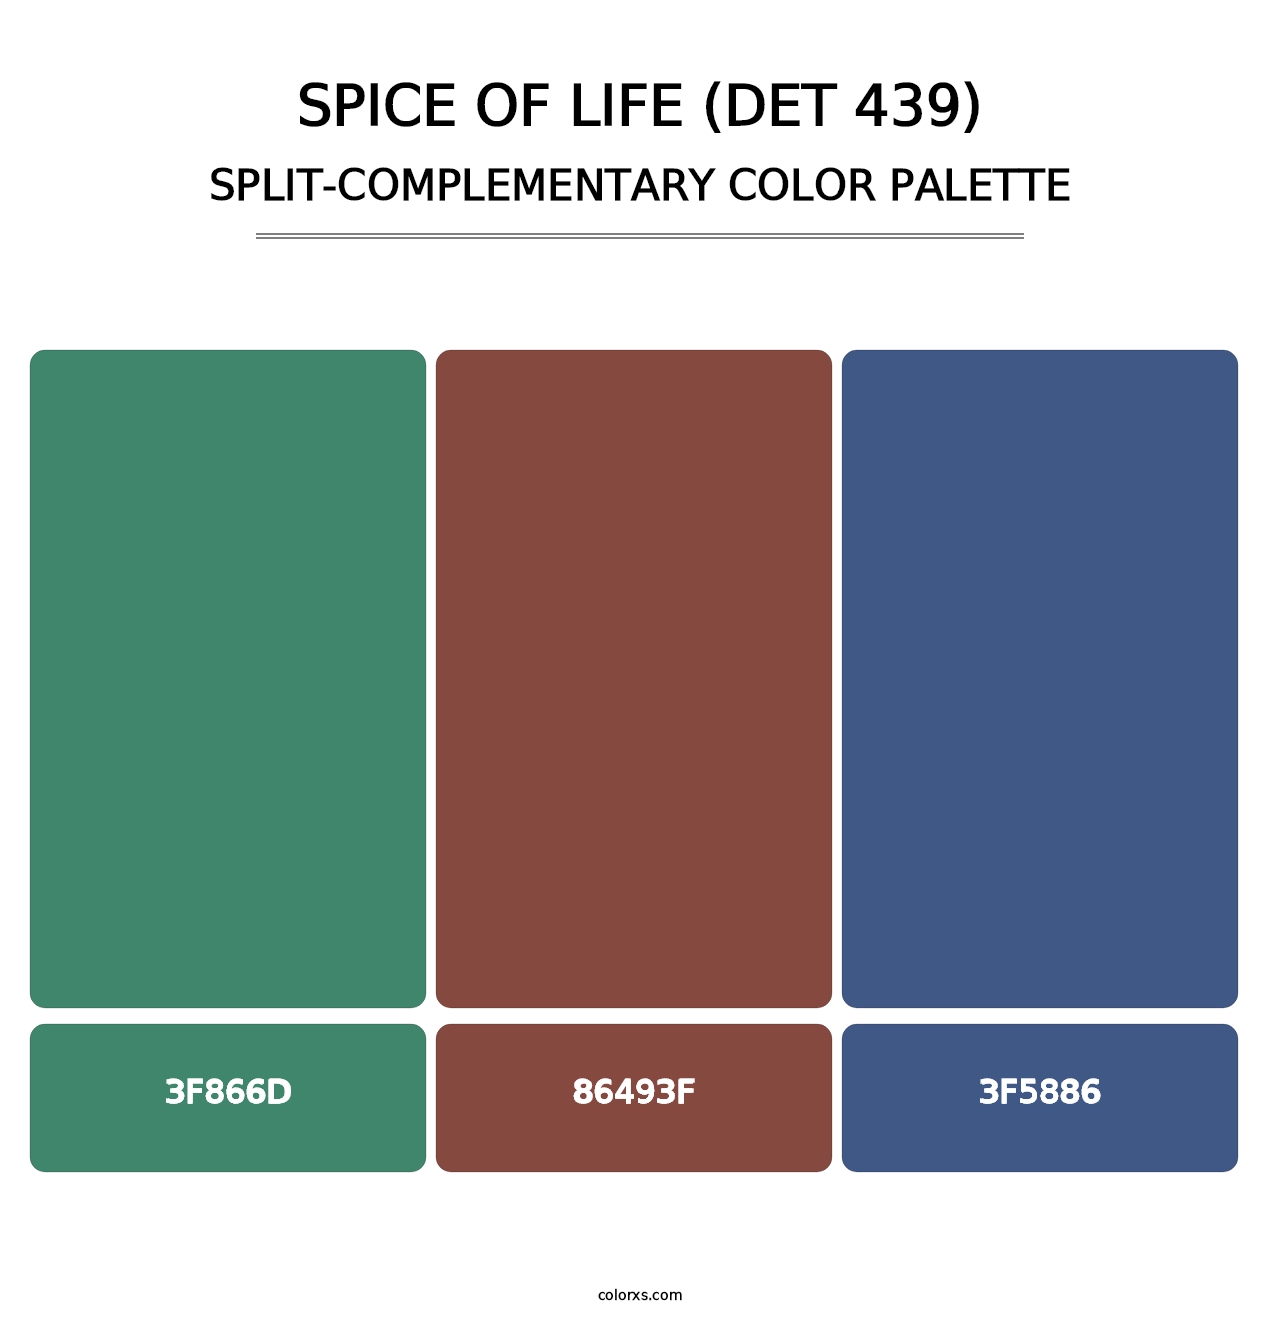 Spice of Life (DET 439) - Split-Complementary Color Palette